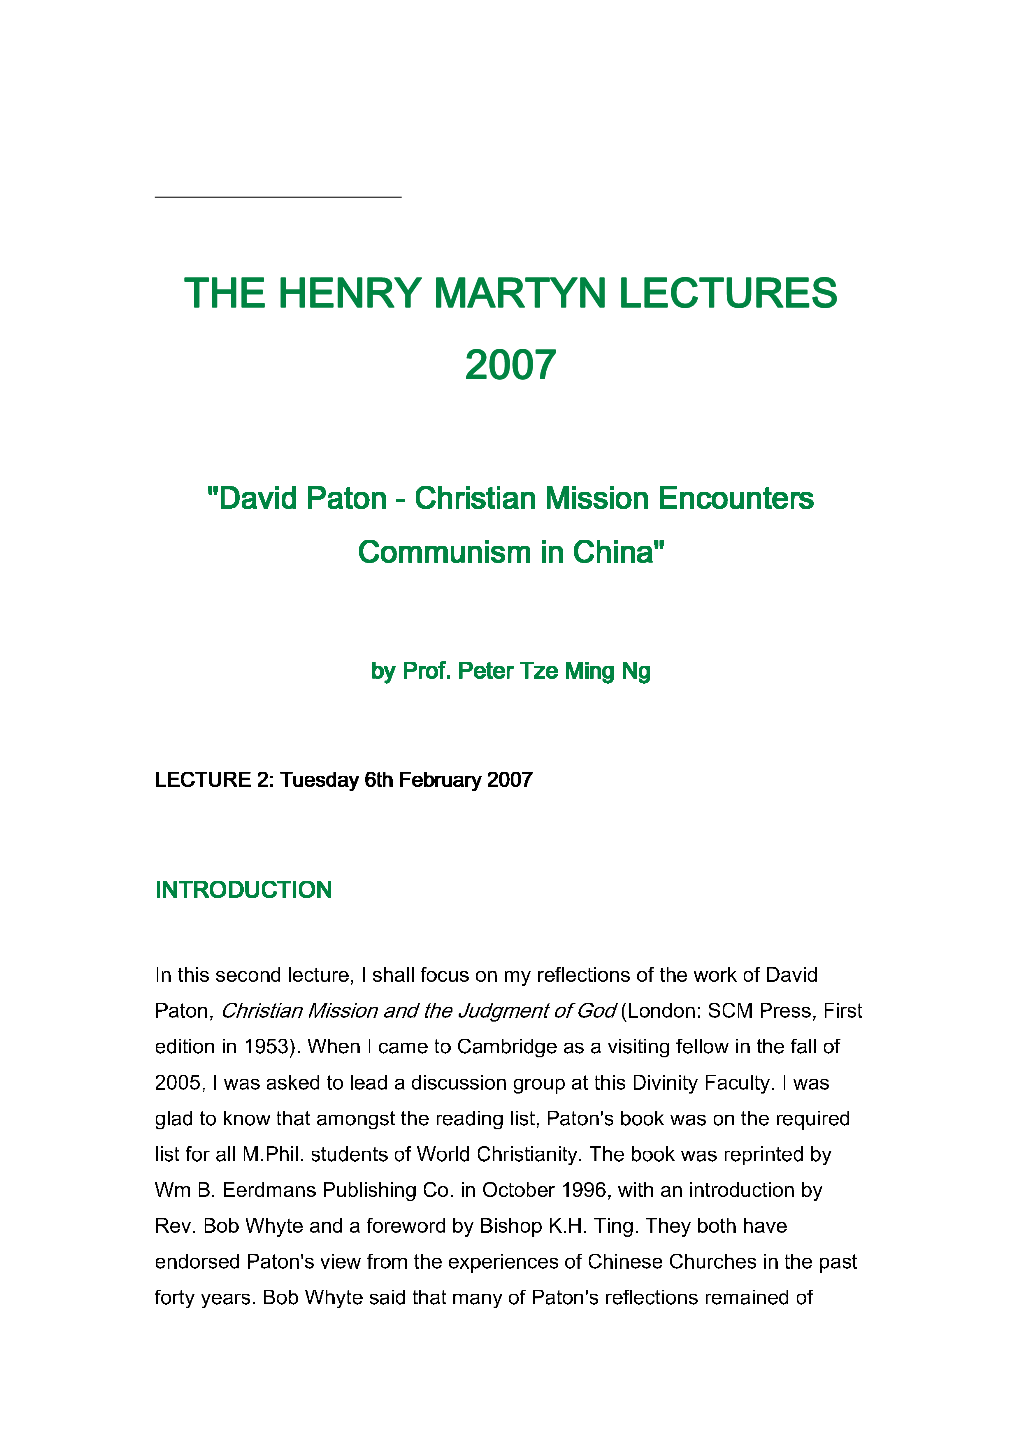 David Paton --- Christian Missiomissionn Encounters Communism in China"